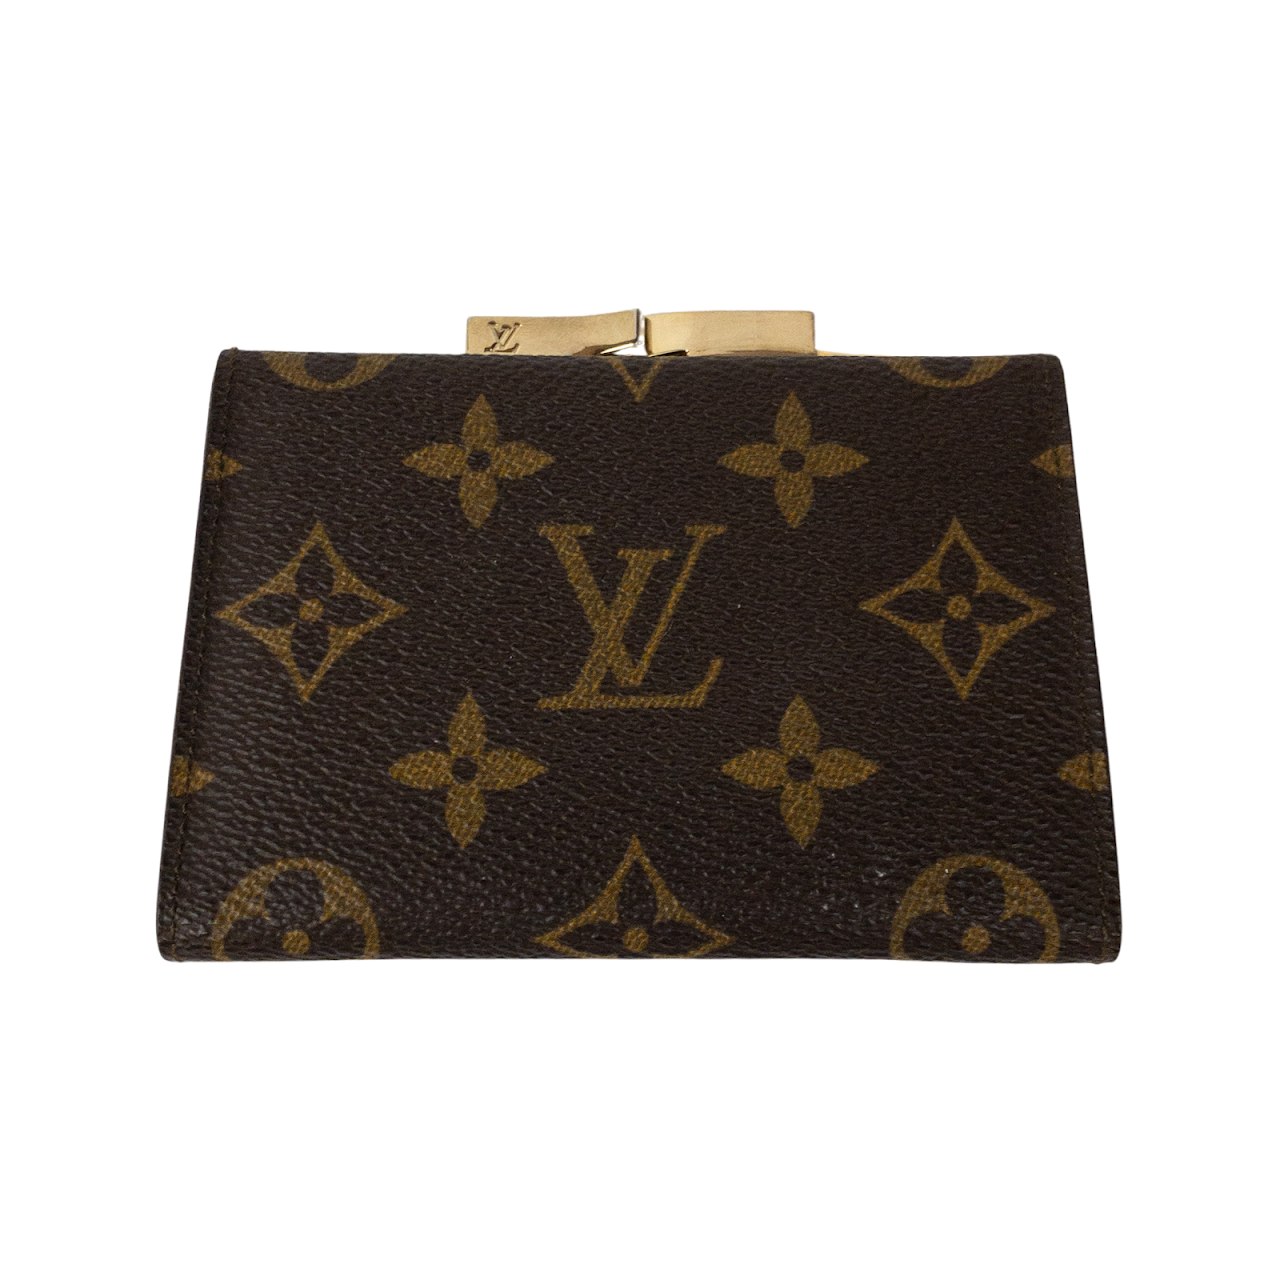 Sold at Auction: Louis Vuitton, LOUIS VUITTON Portemonnaie FRENCH